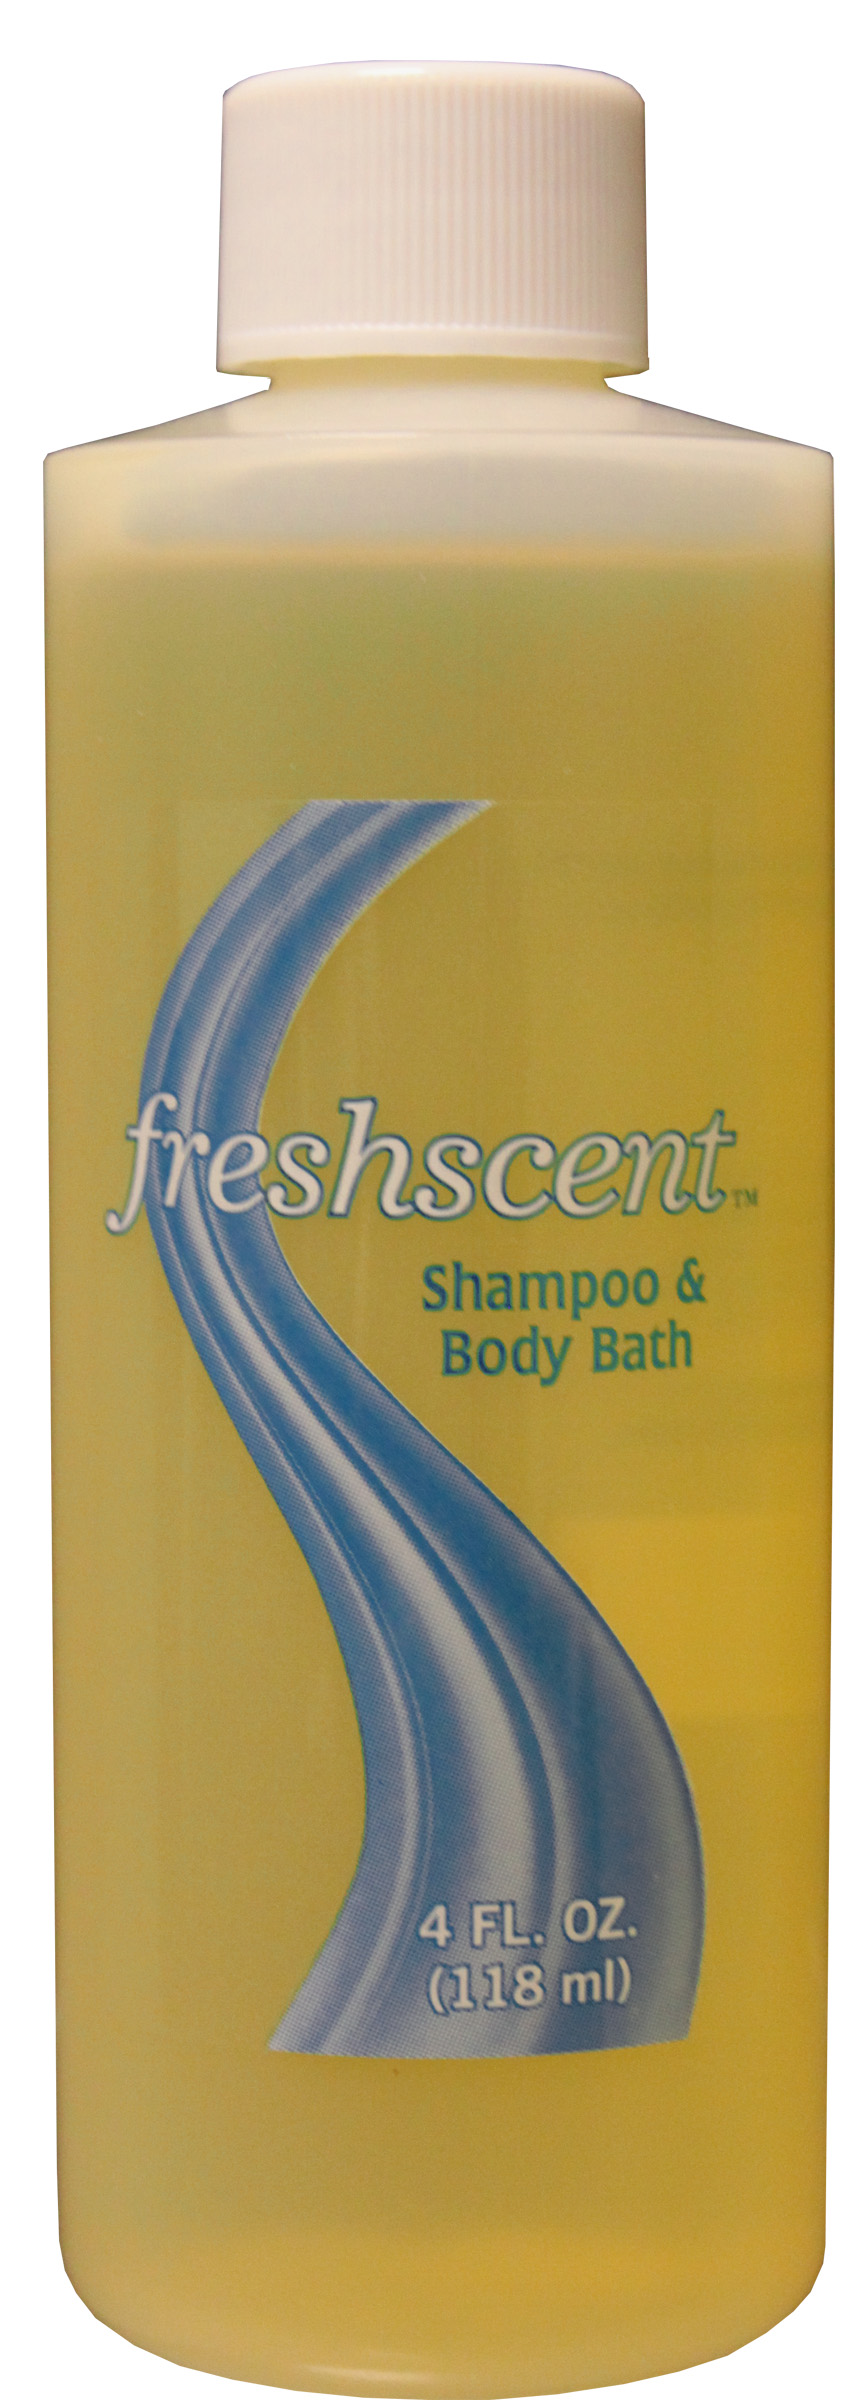 Freshscent 4 oz. Shampoo & Body Wash